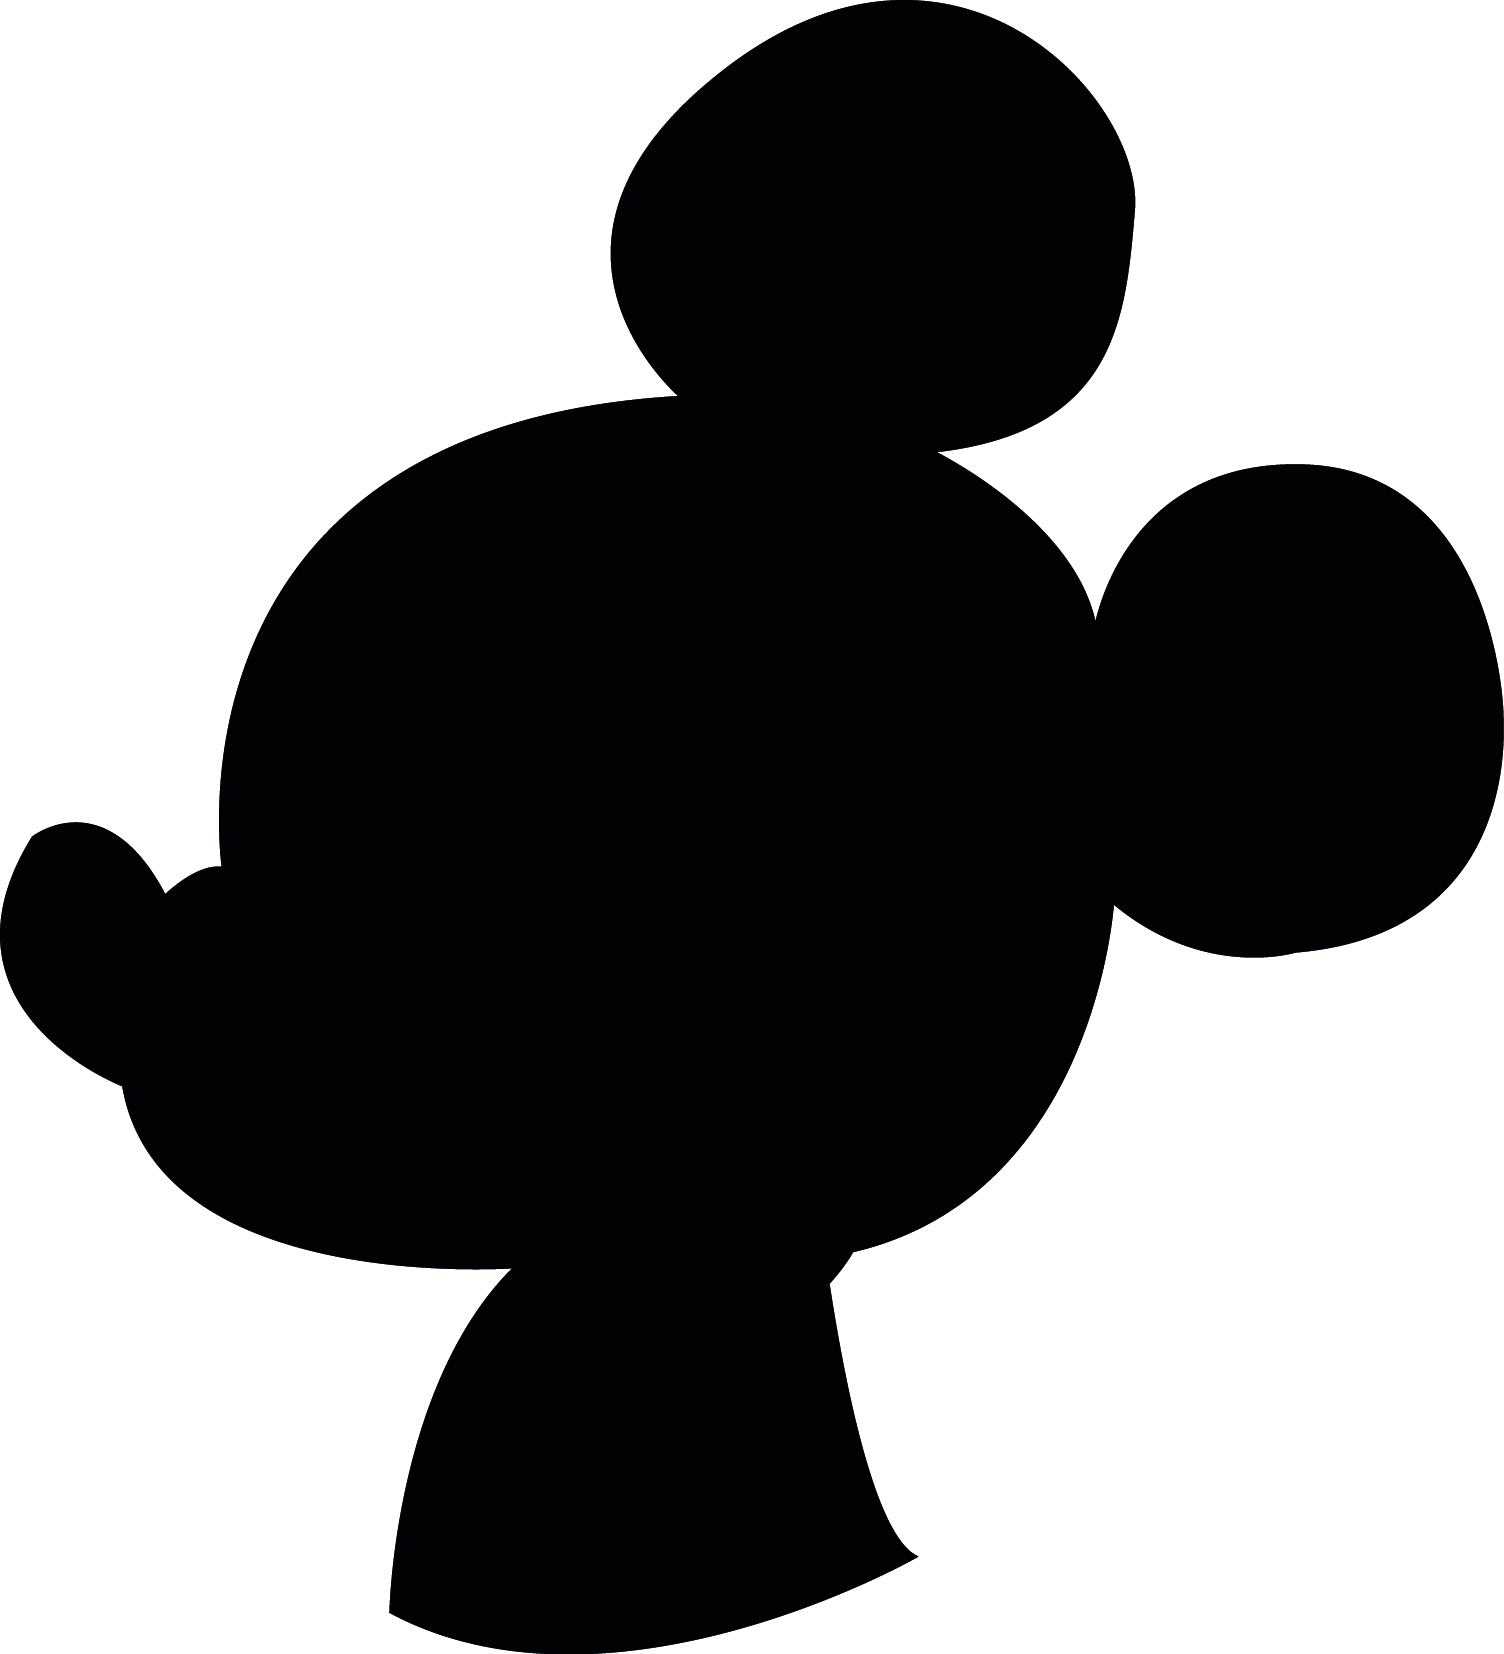 Disney Silhouette Printable at GetDrawings Free download